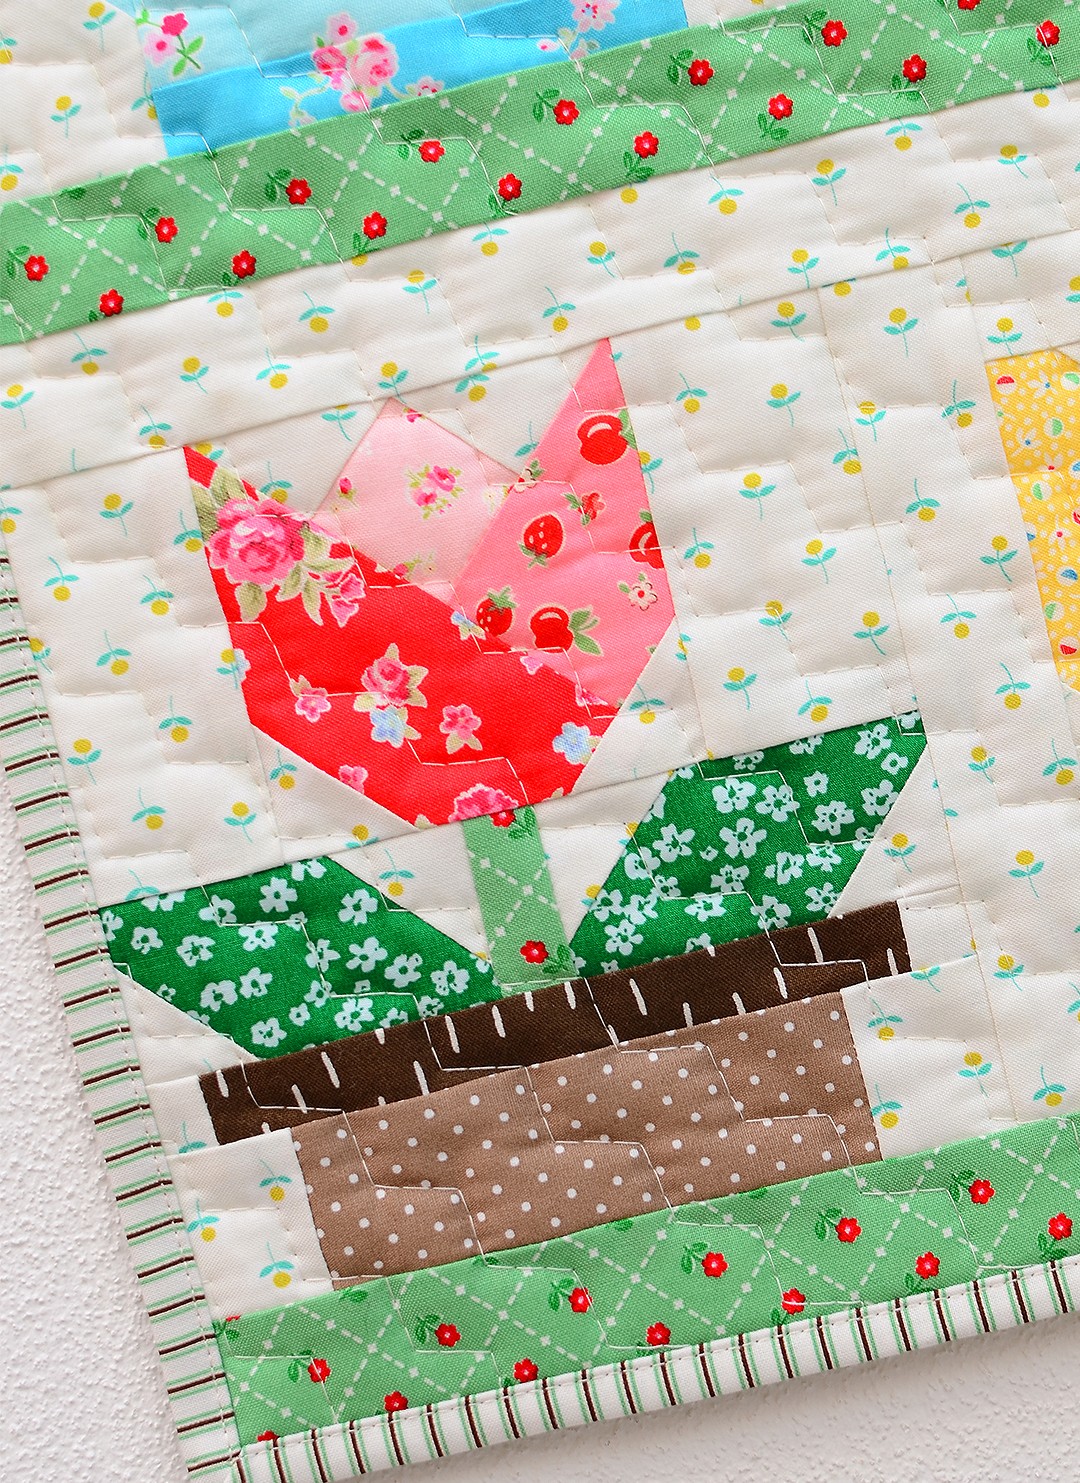 Country Garden quilt pattern - Mini